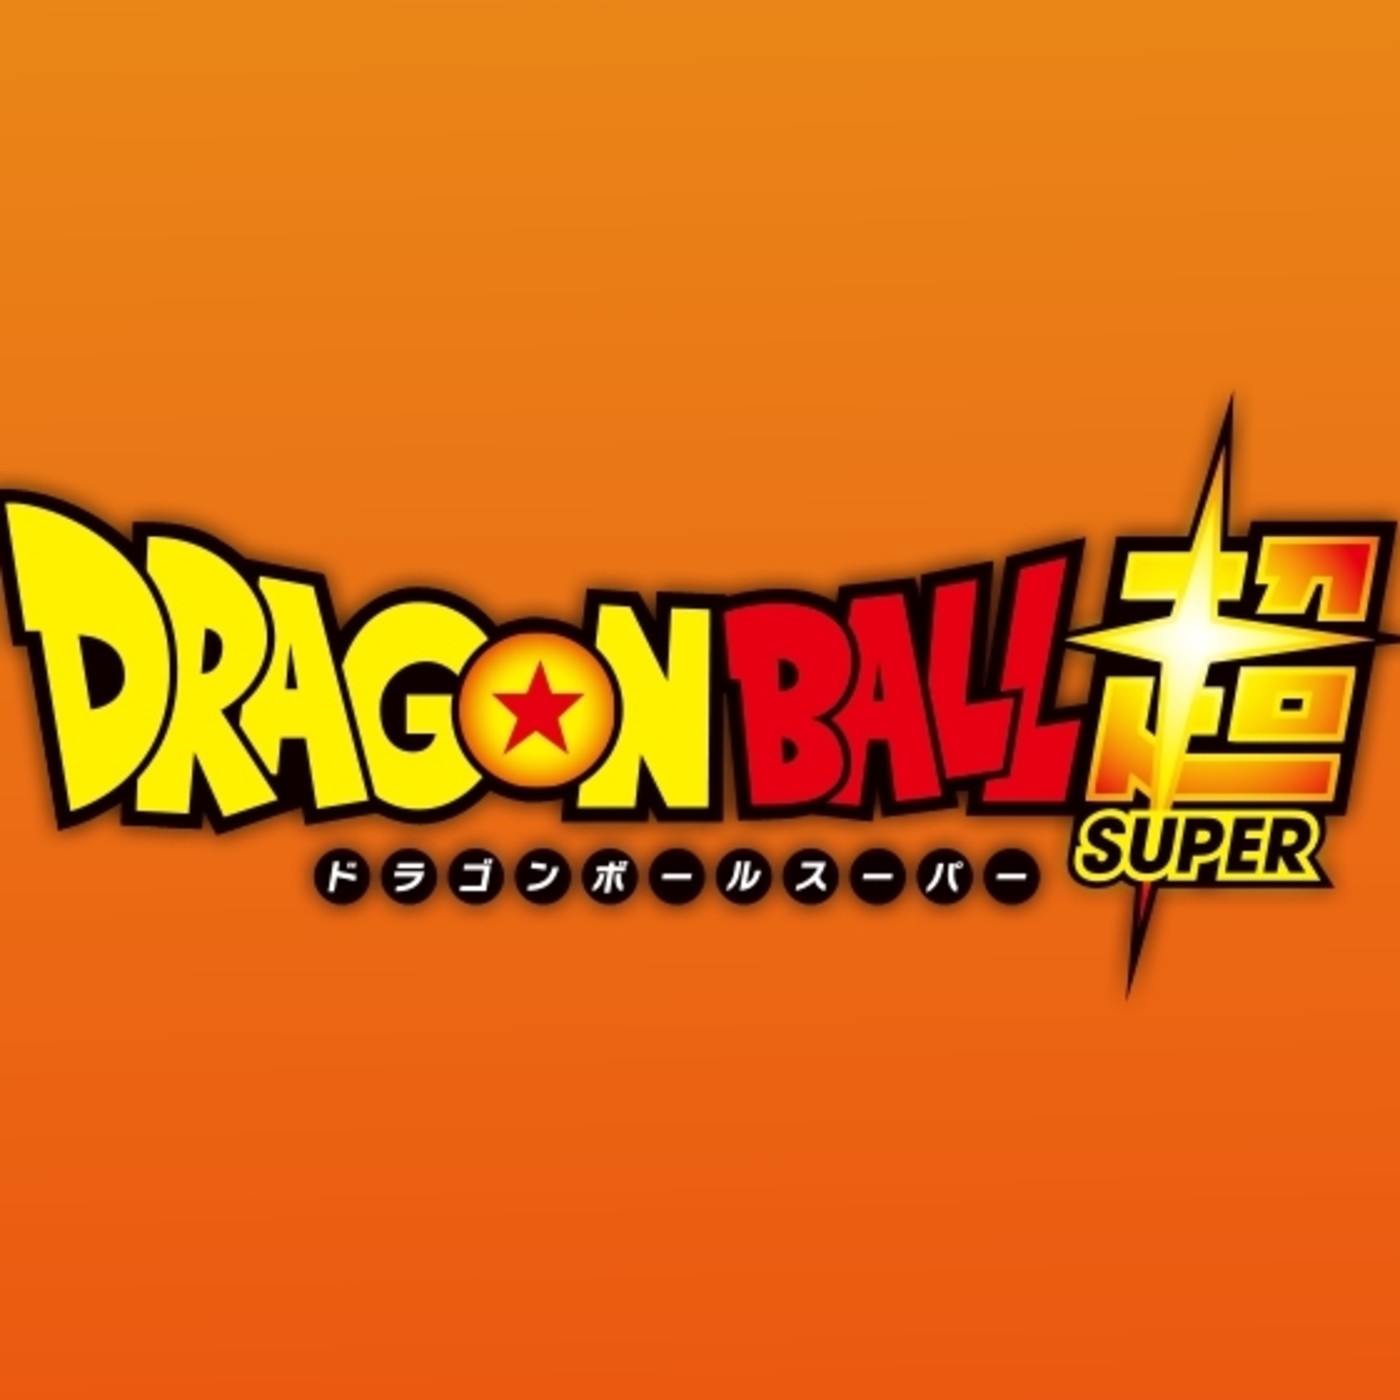 Gambatte Podcast | 'Dragon Ball Super': Ep. 25, 26 y 27 en castellano